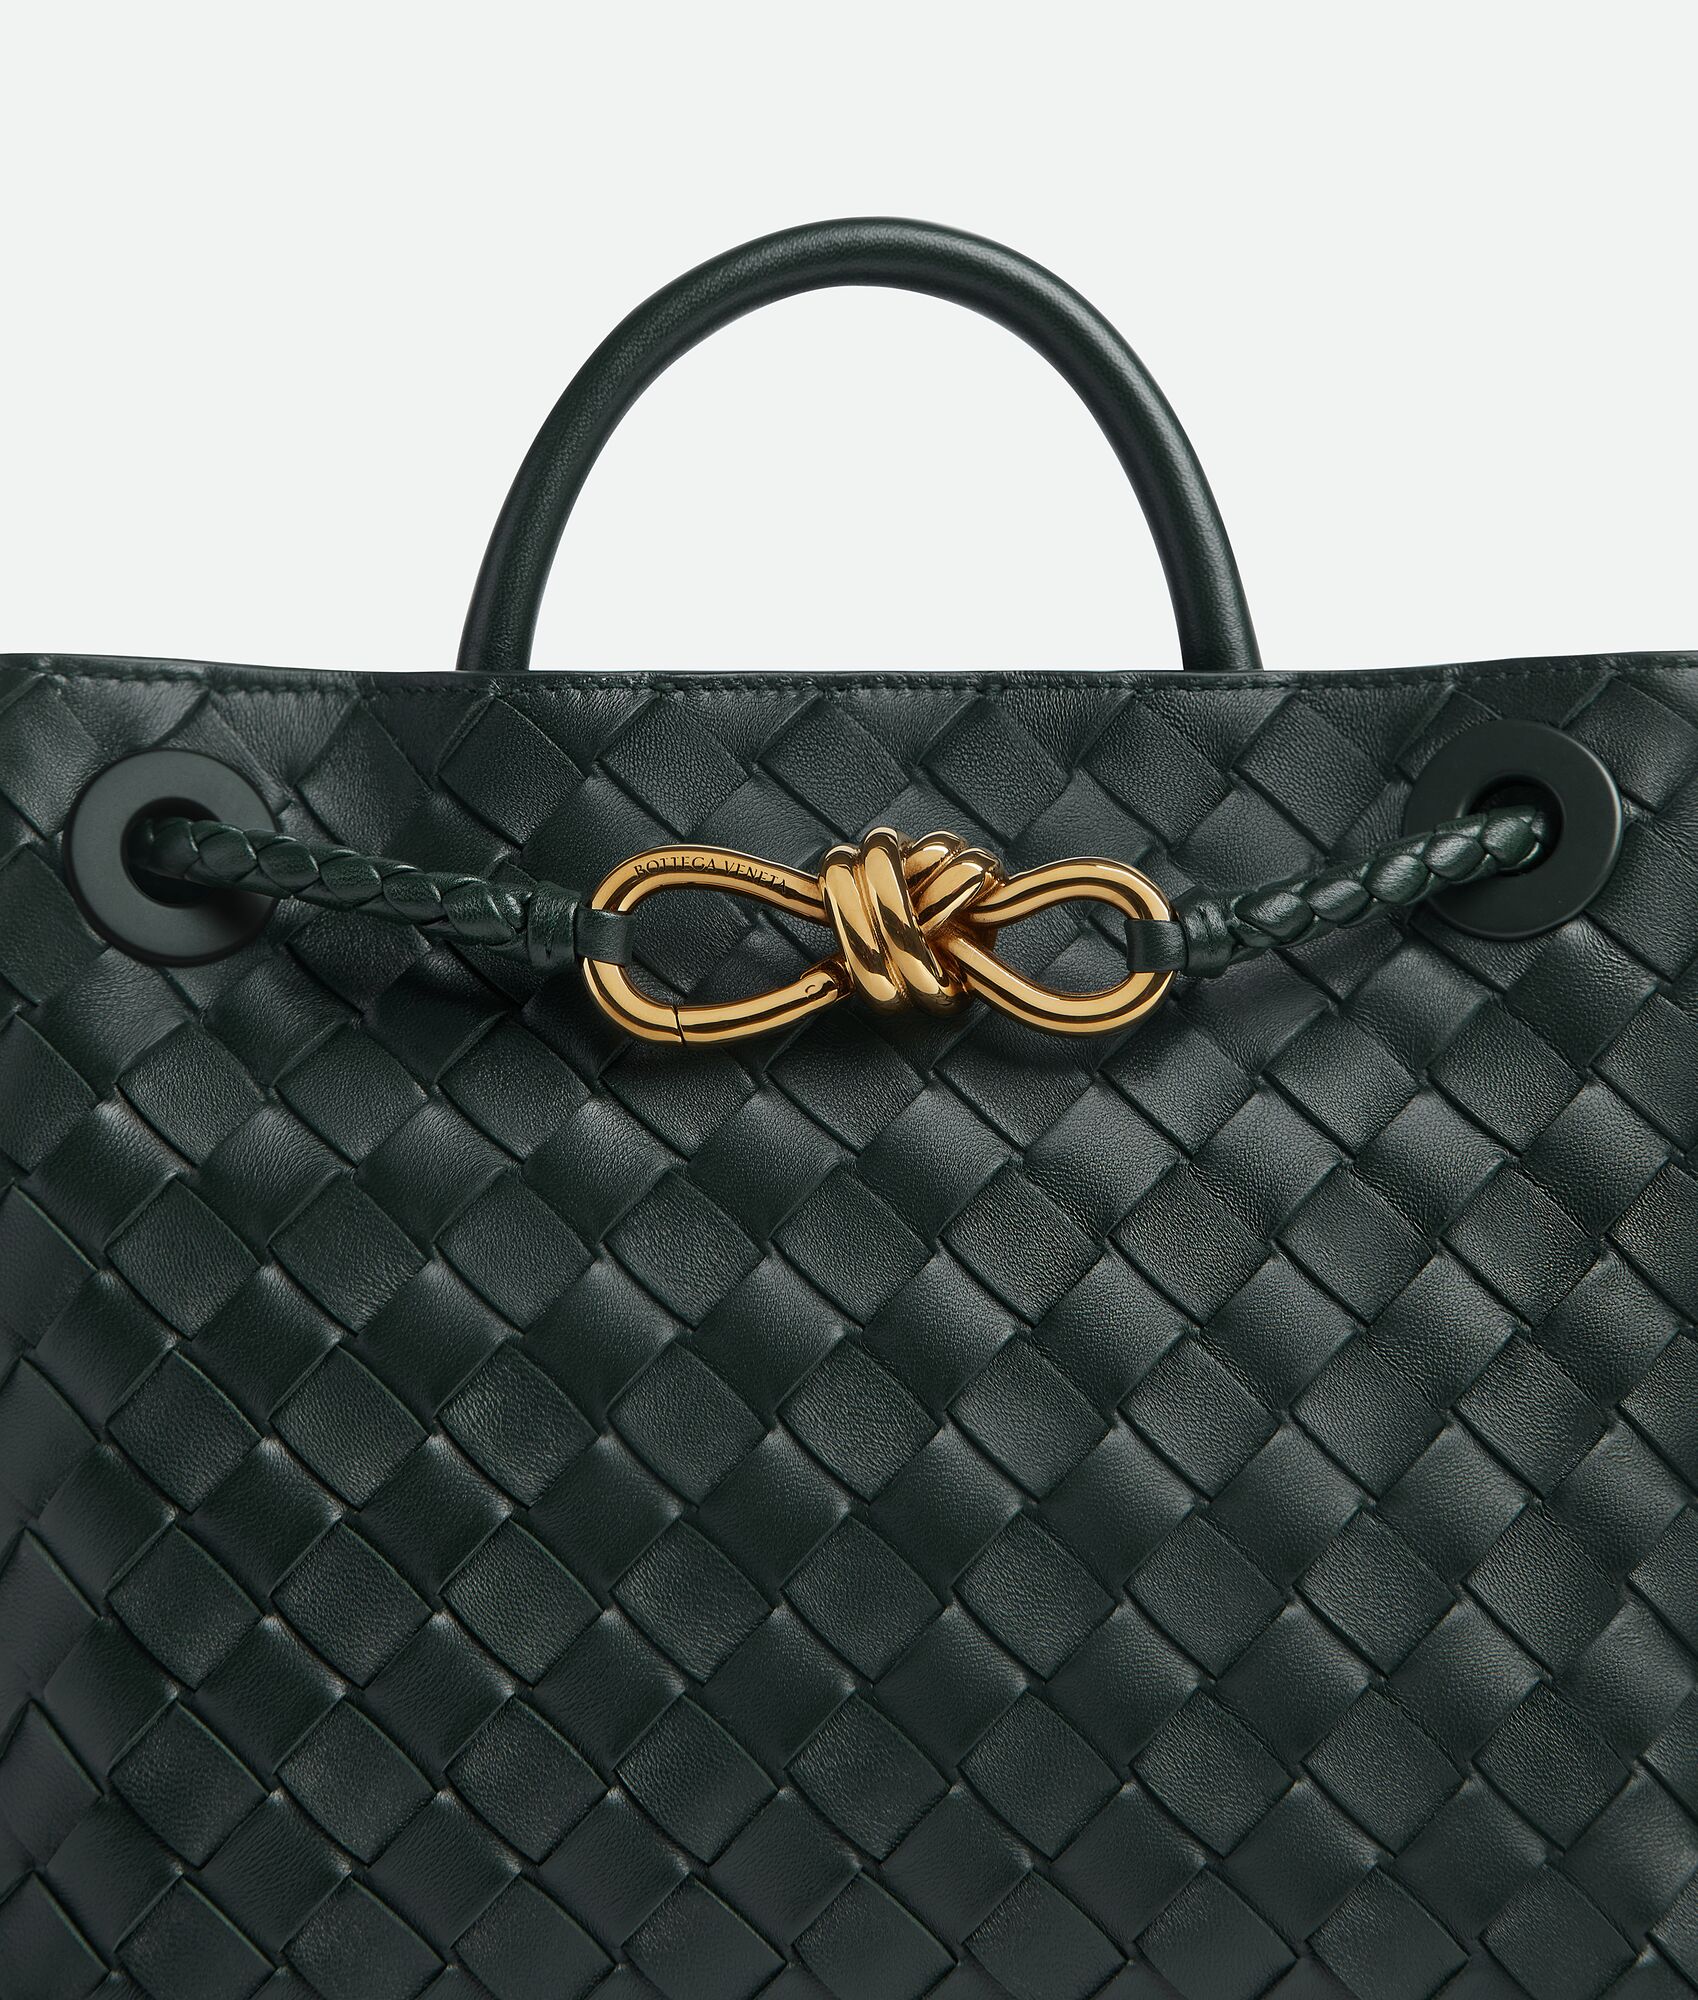 Bottega Veneta® Women's Mini Cobble Shoulder Bag in Black. Shop online now.